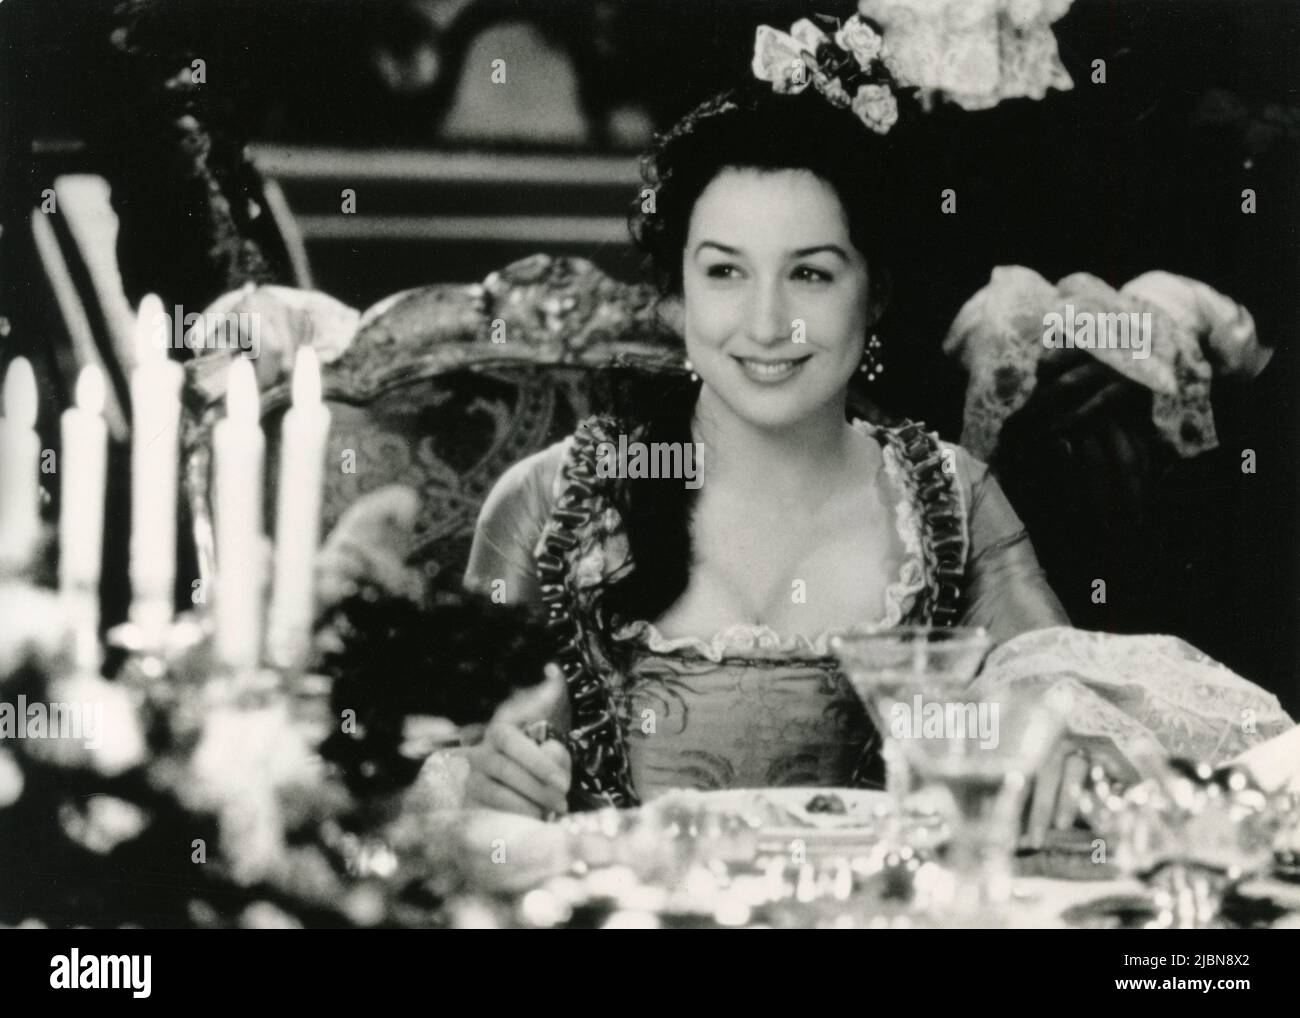 La actriz francesa Elsa Zylberstein en la película Farinelli, Italia 1994 Foto de stock